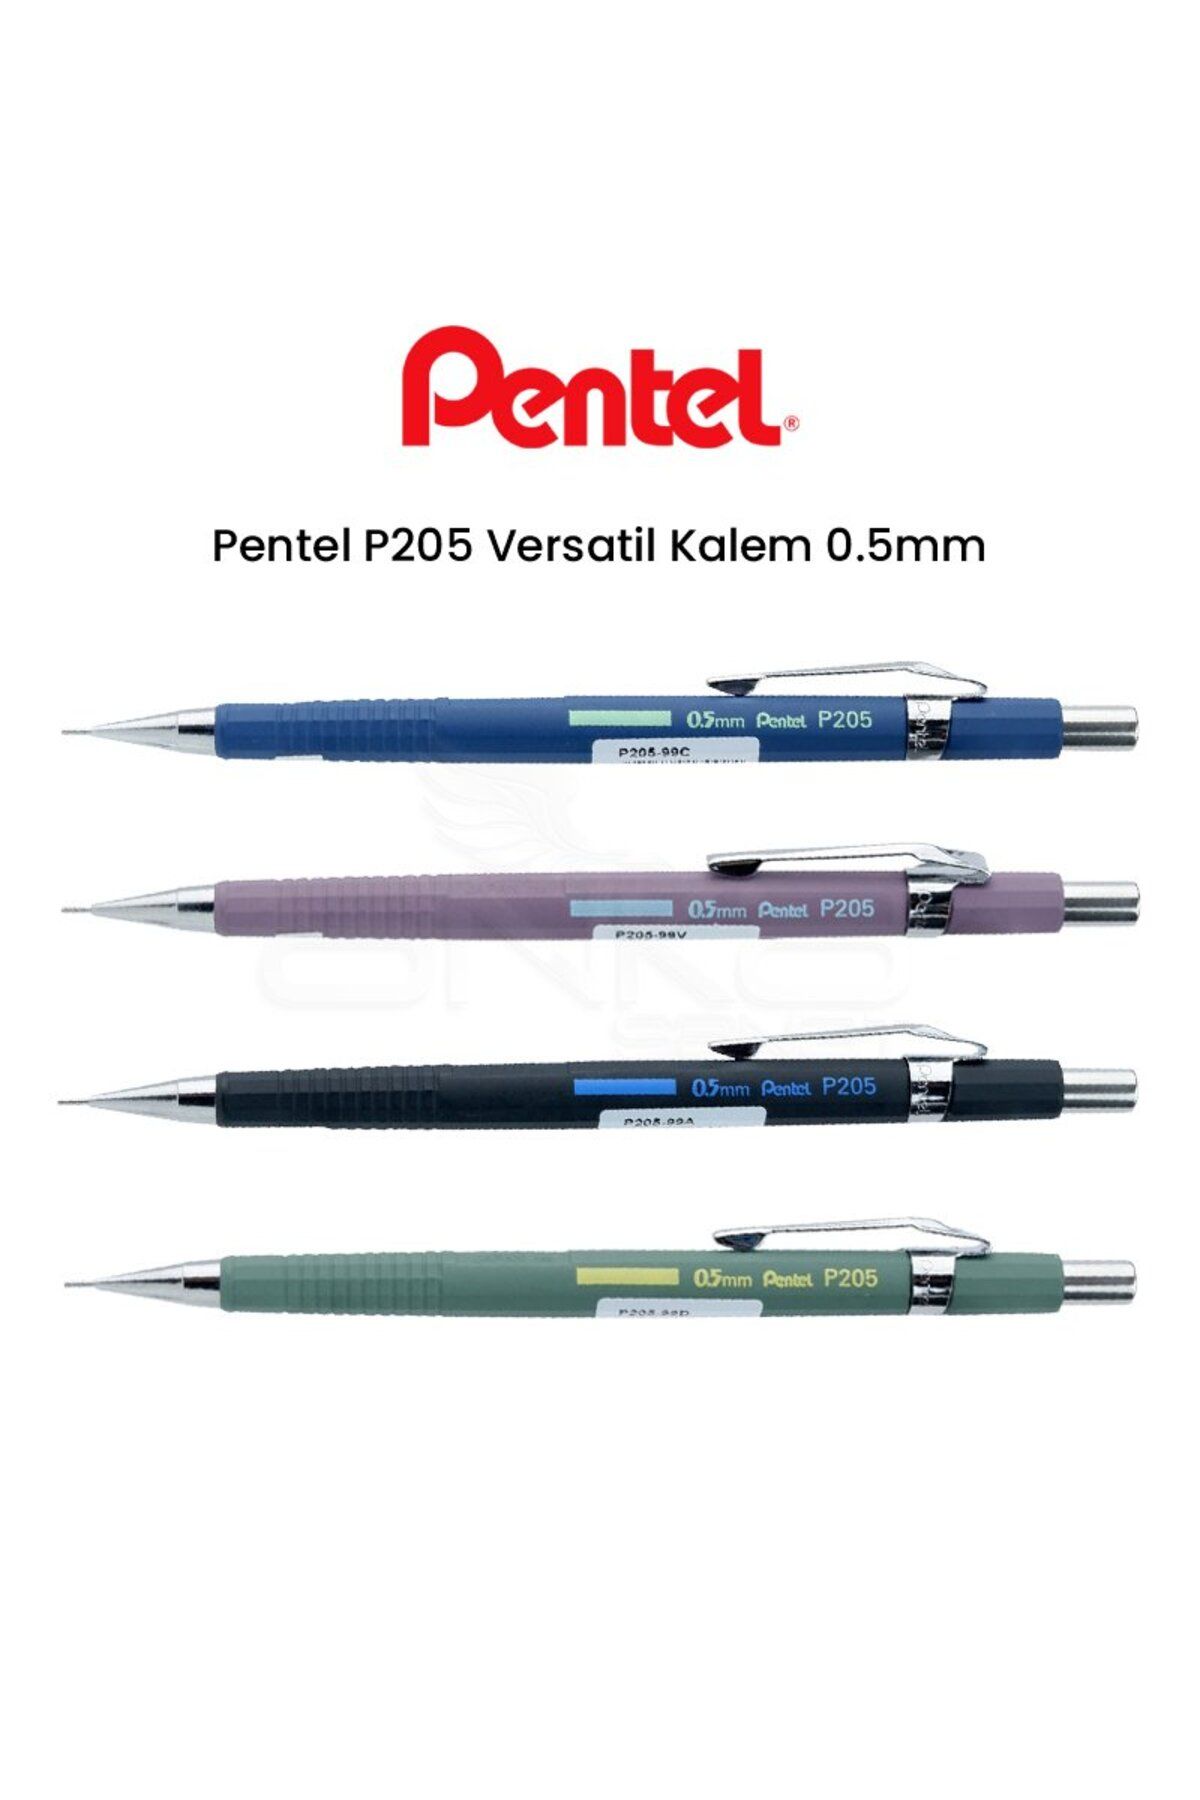 Pentel P205 Versatil Kalem 0.5mm